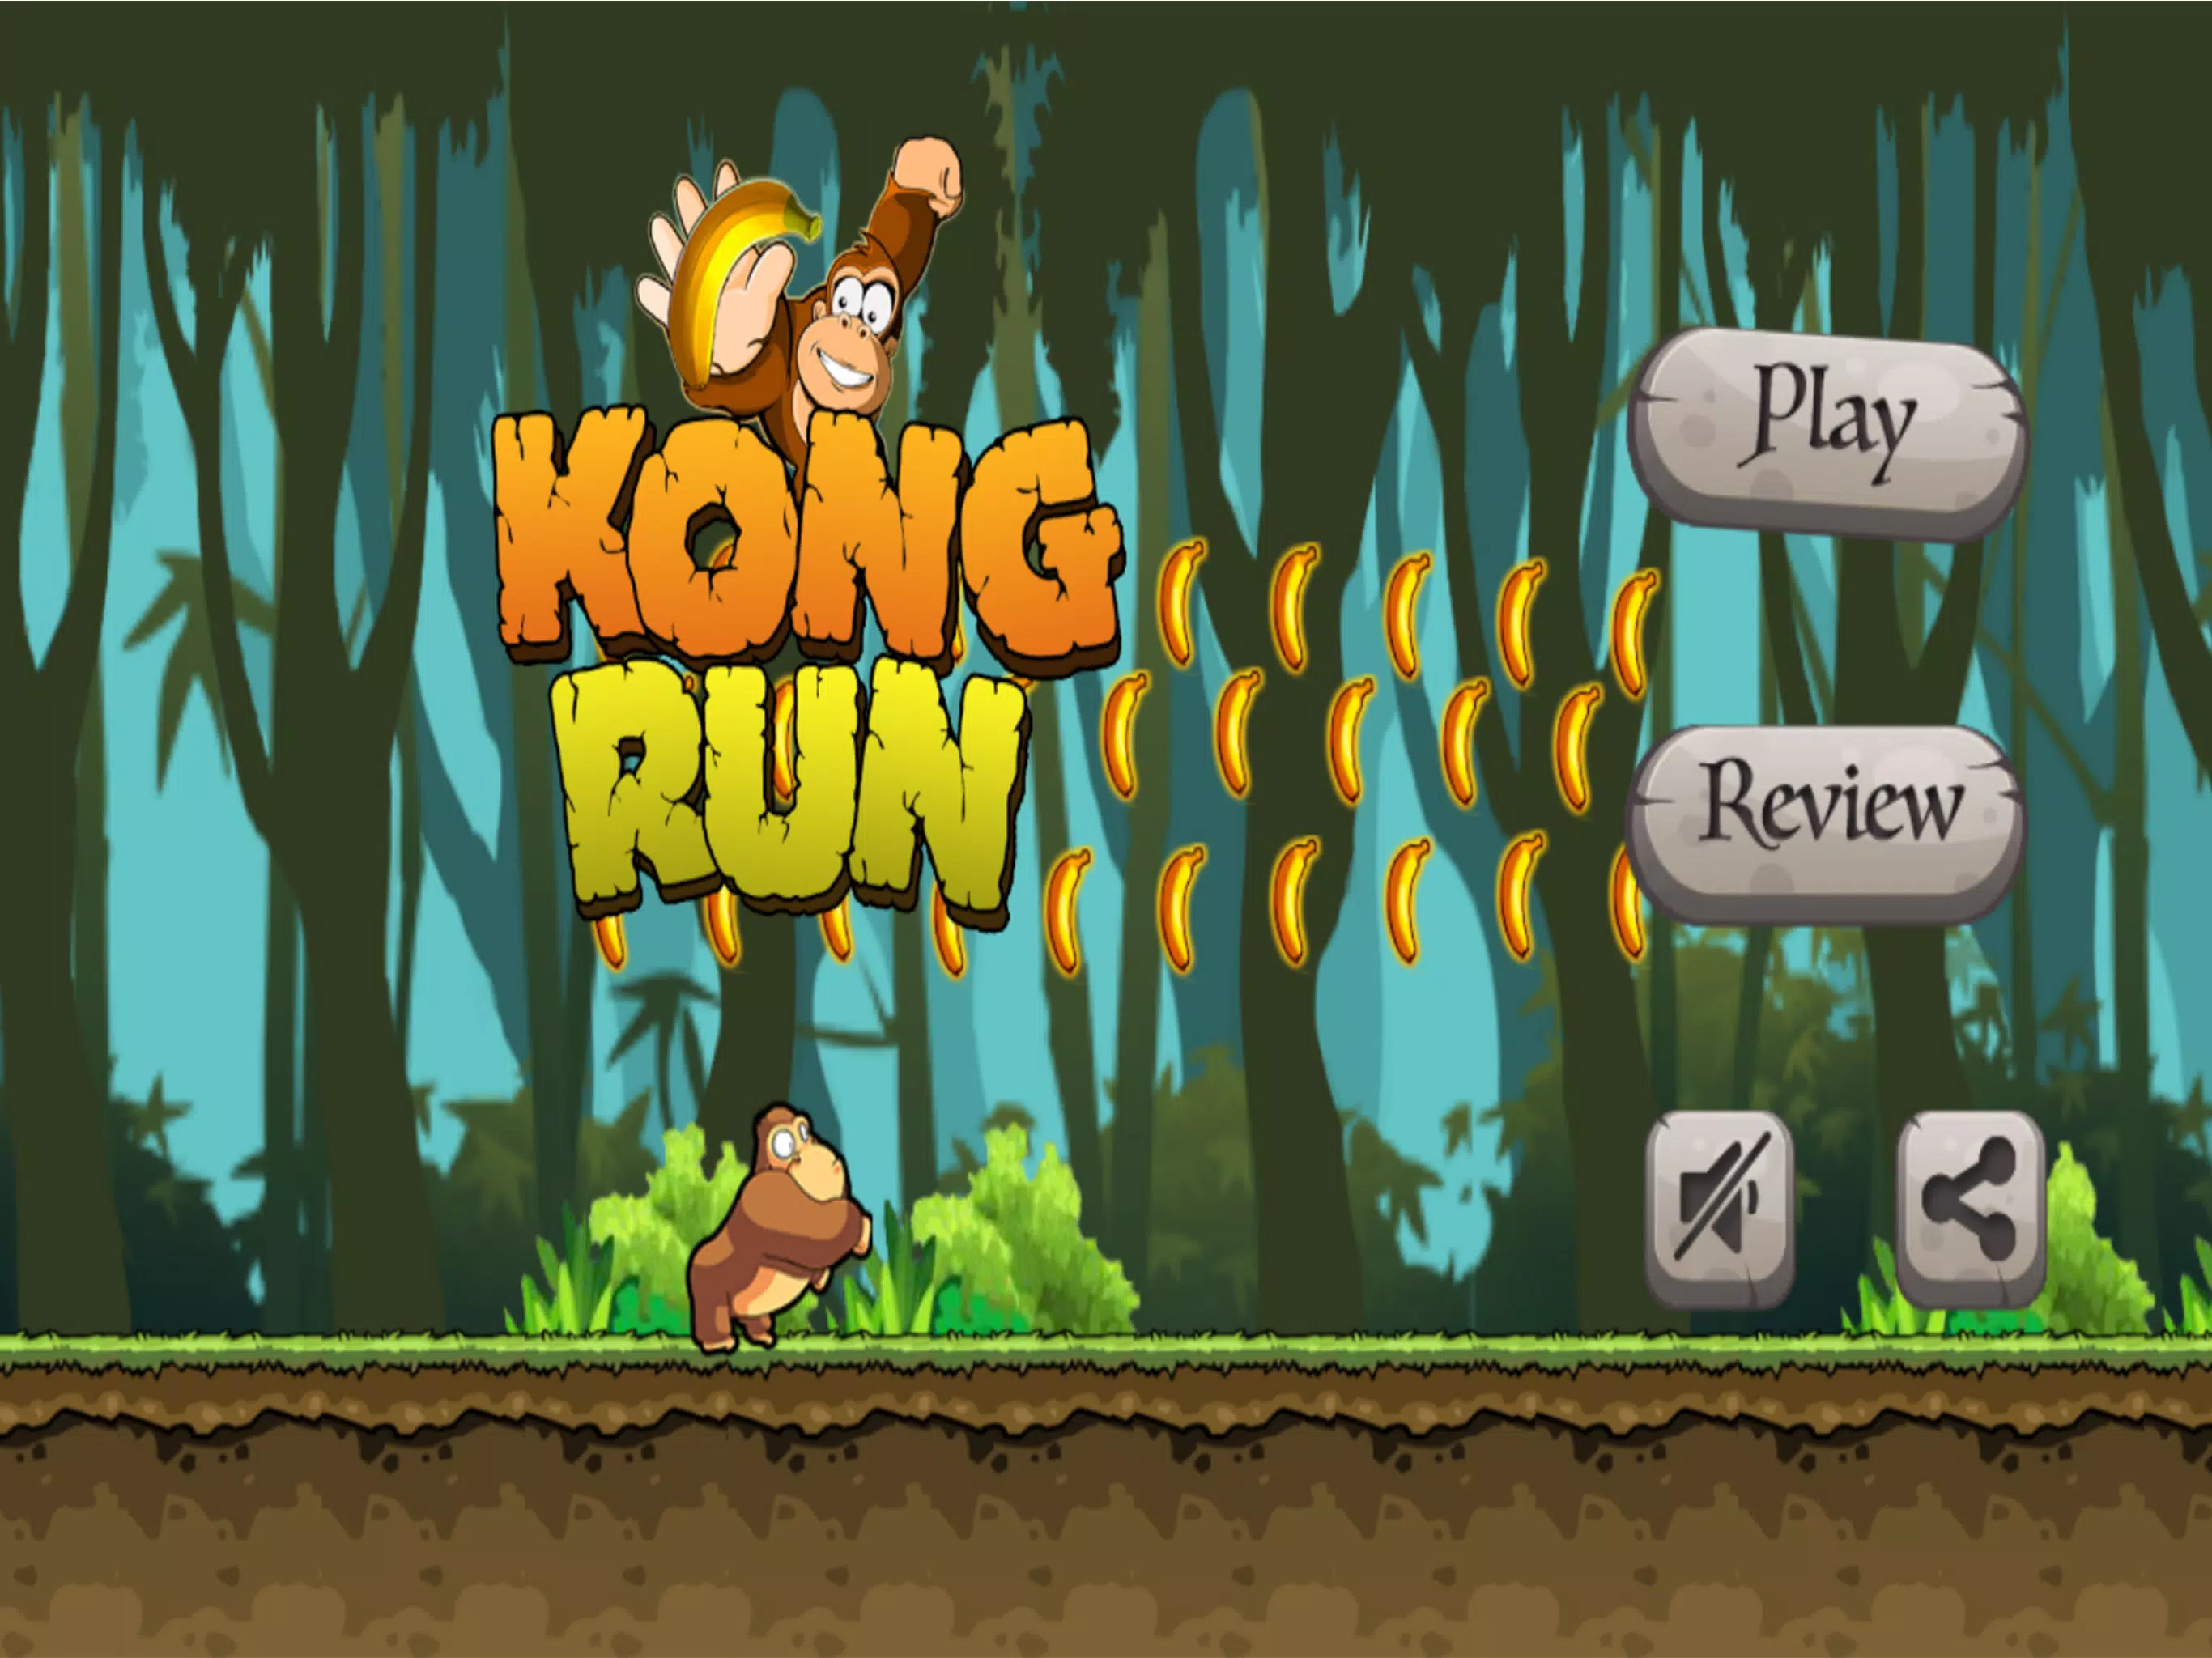 Super Macaco Saltador: Banana APK (Android Game) - Baixar Grátis